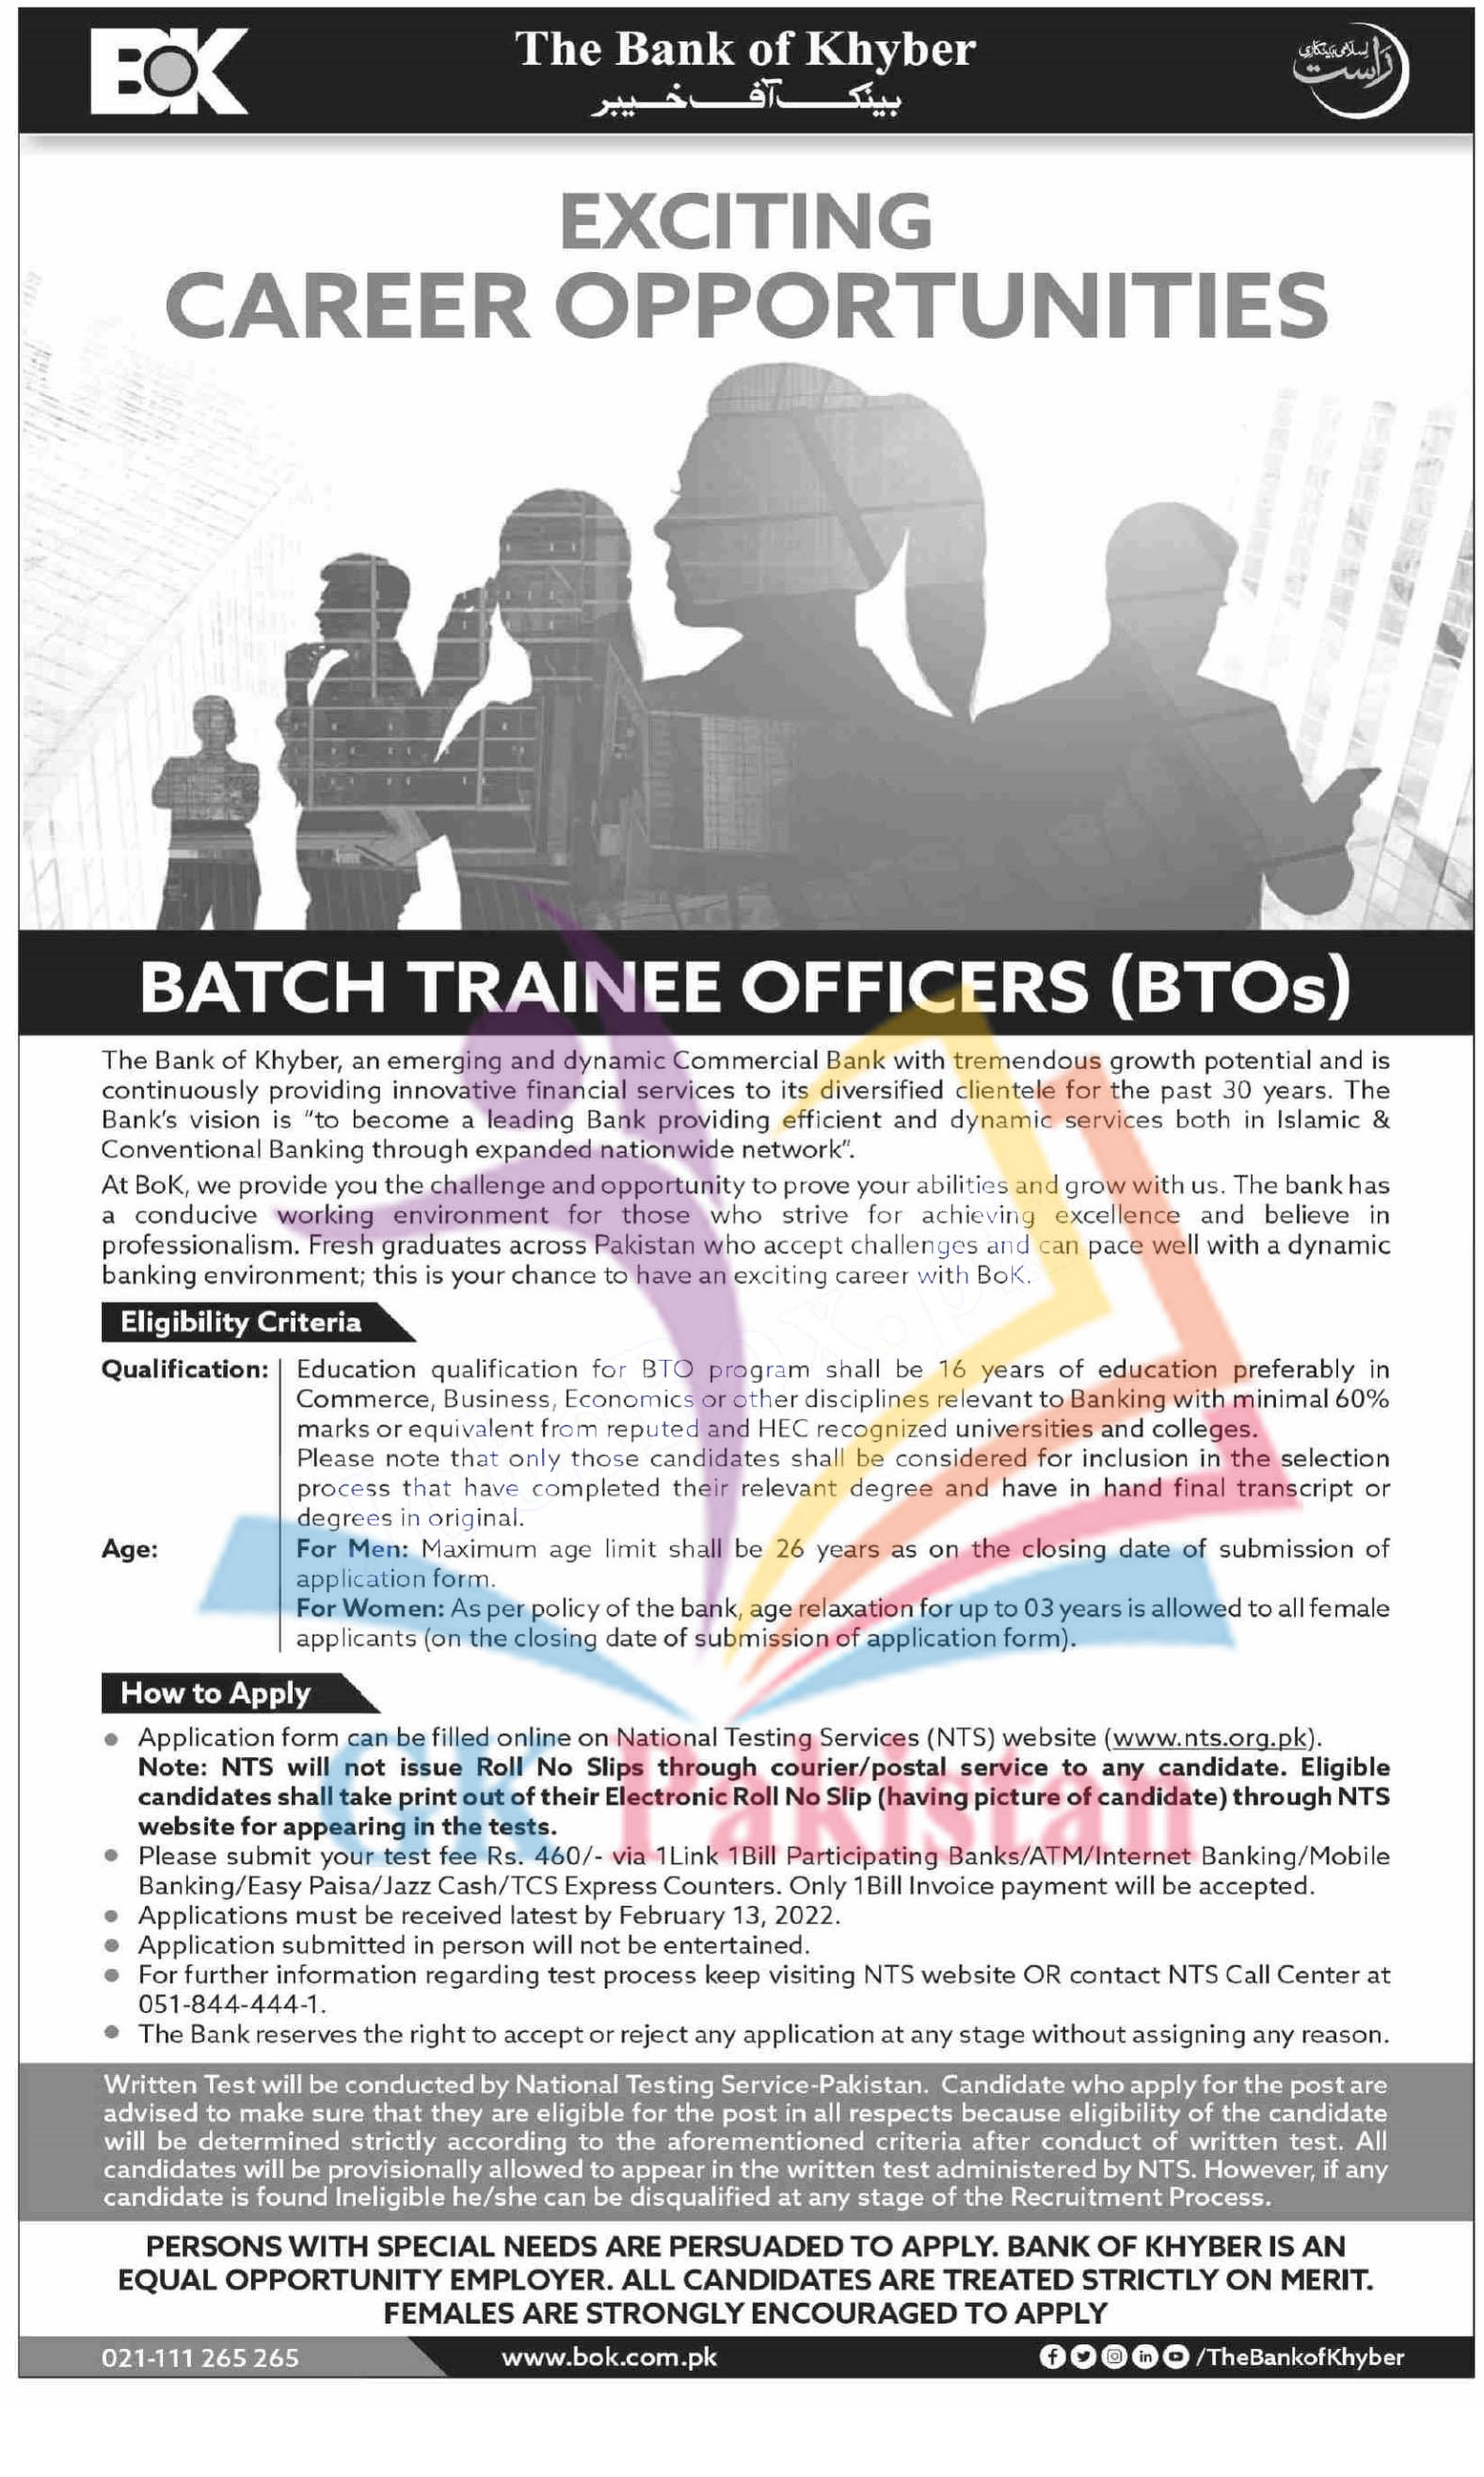 BOK Jobs 2022 - Batch Officers-in-Training BTO Program through NTS